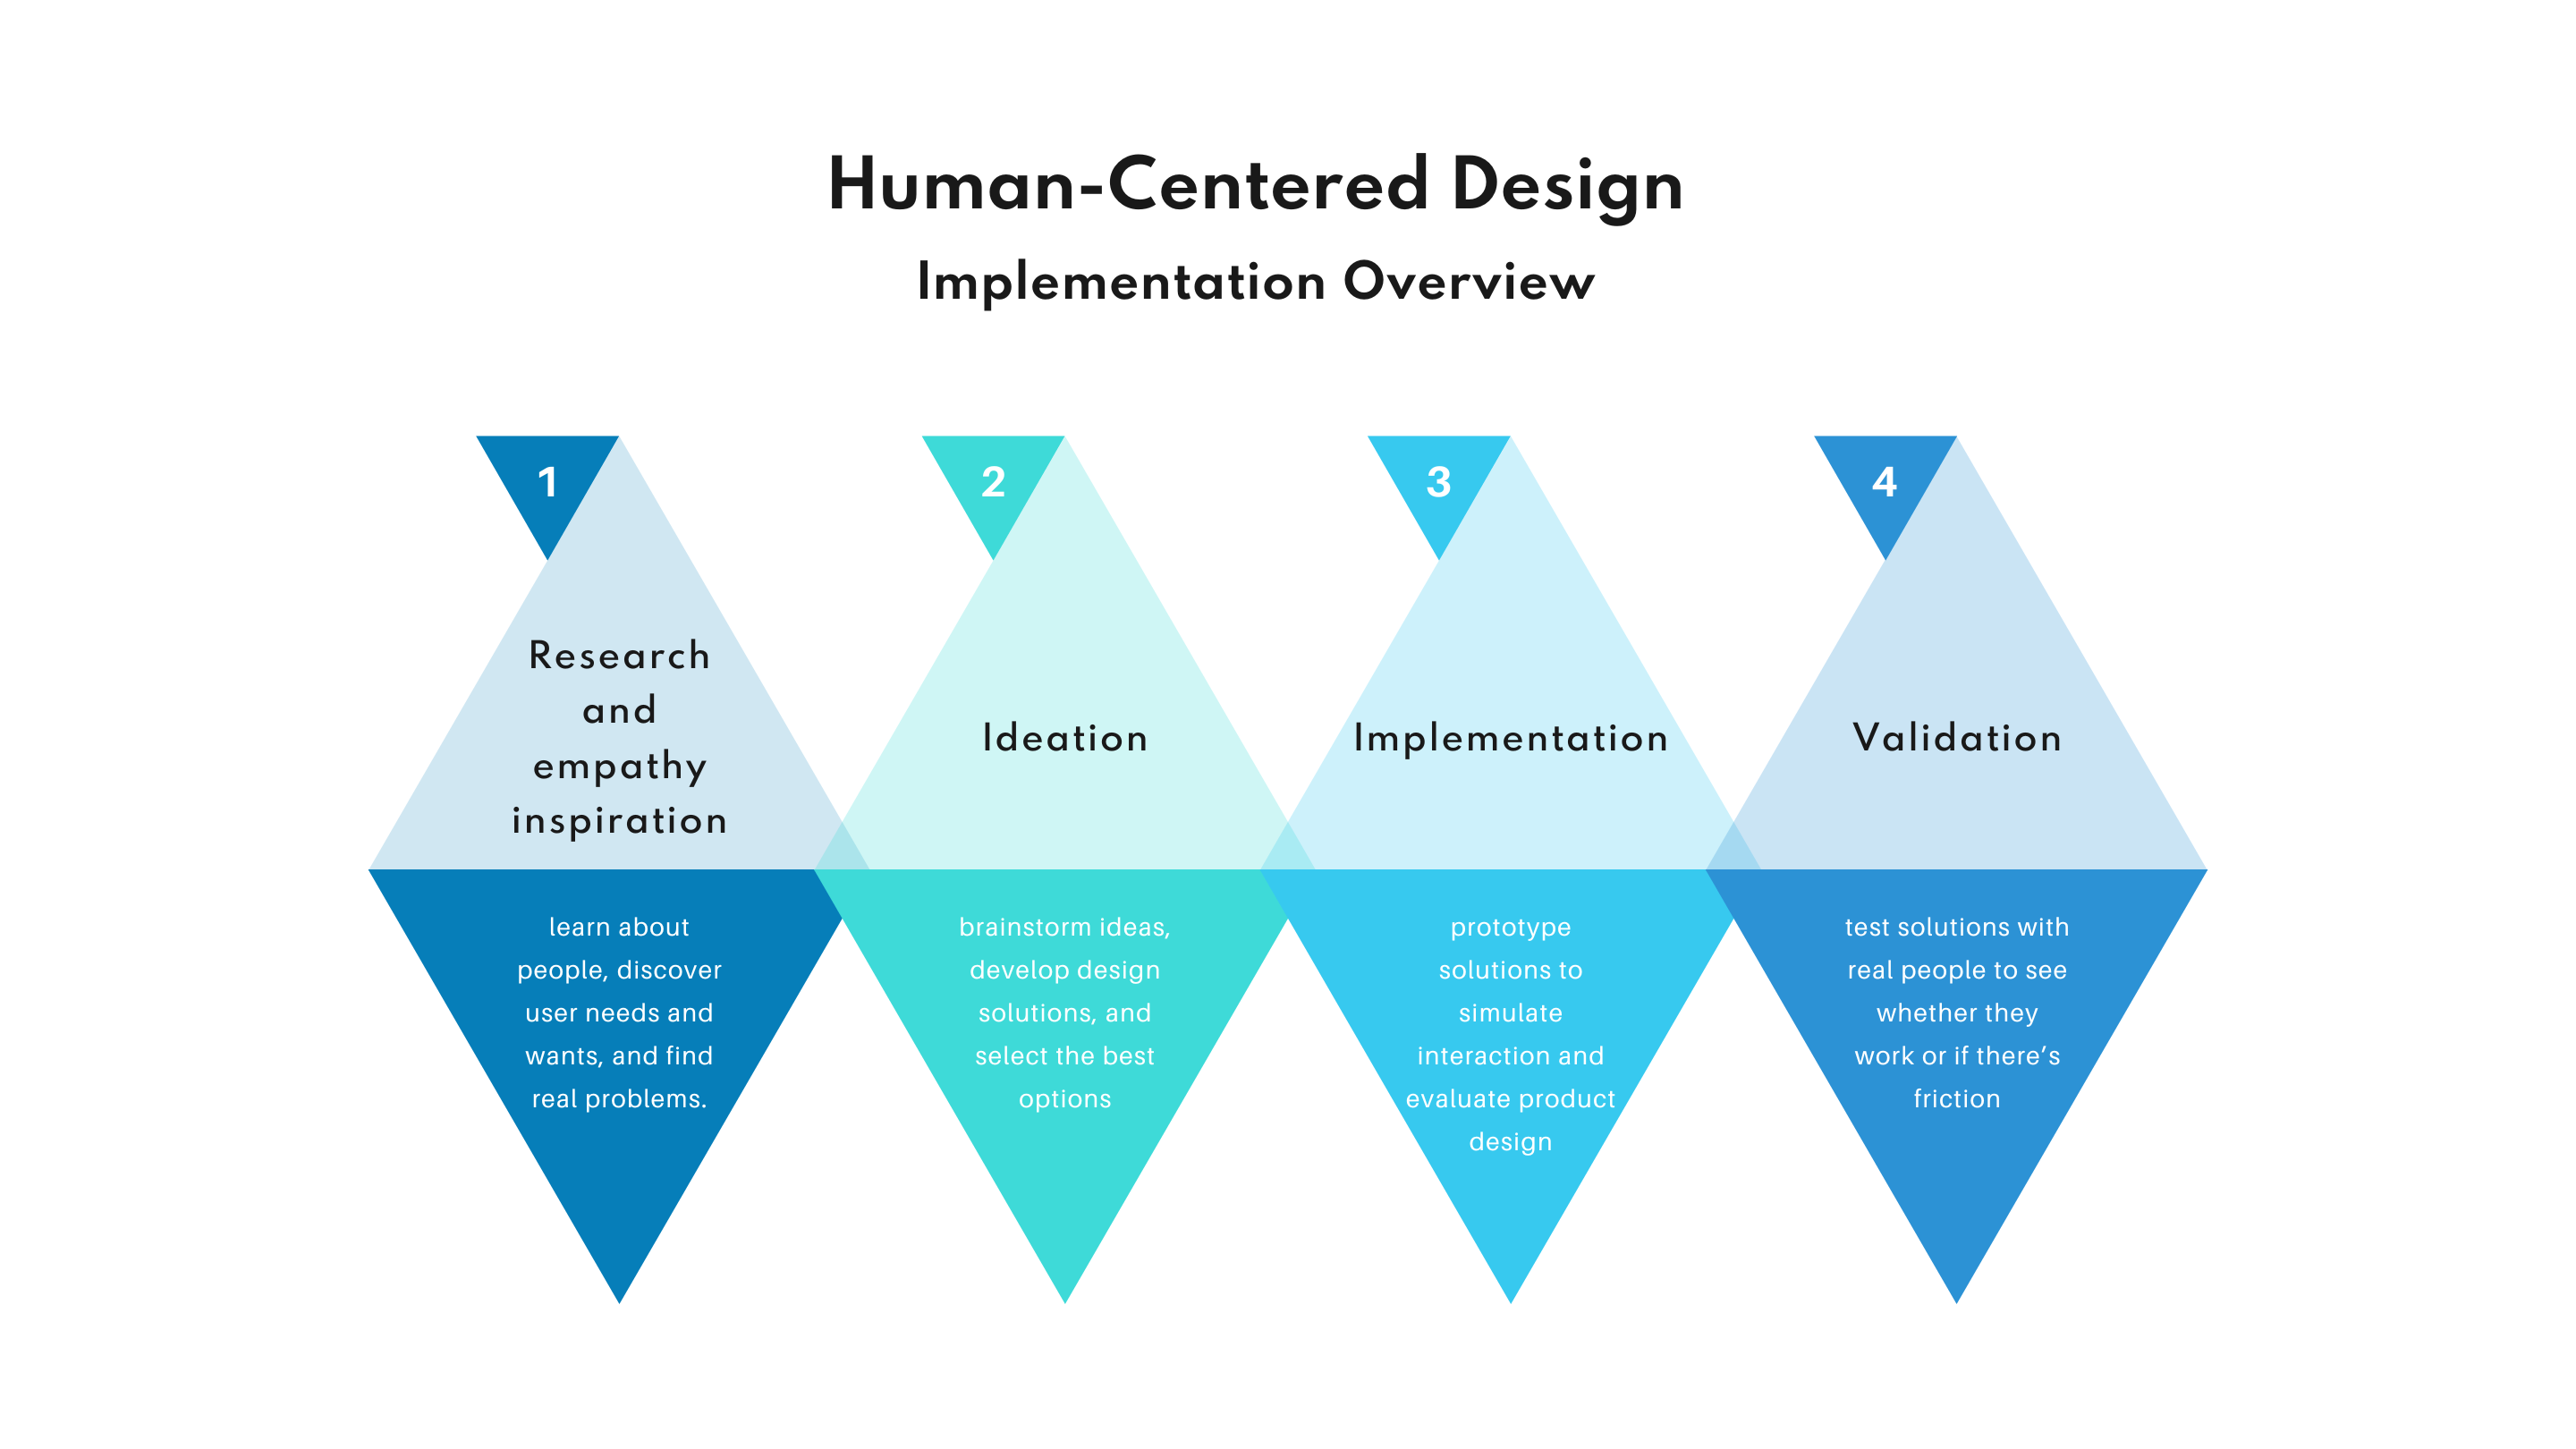 Human-centered design implementation overview. 